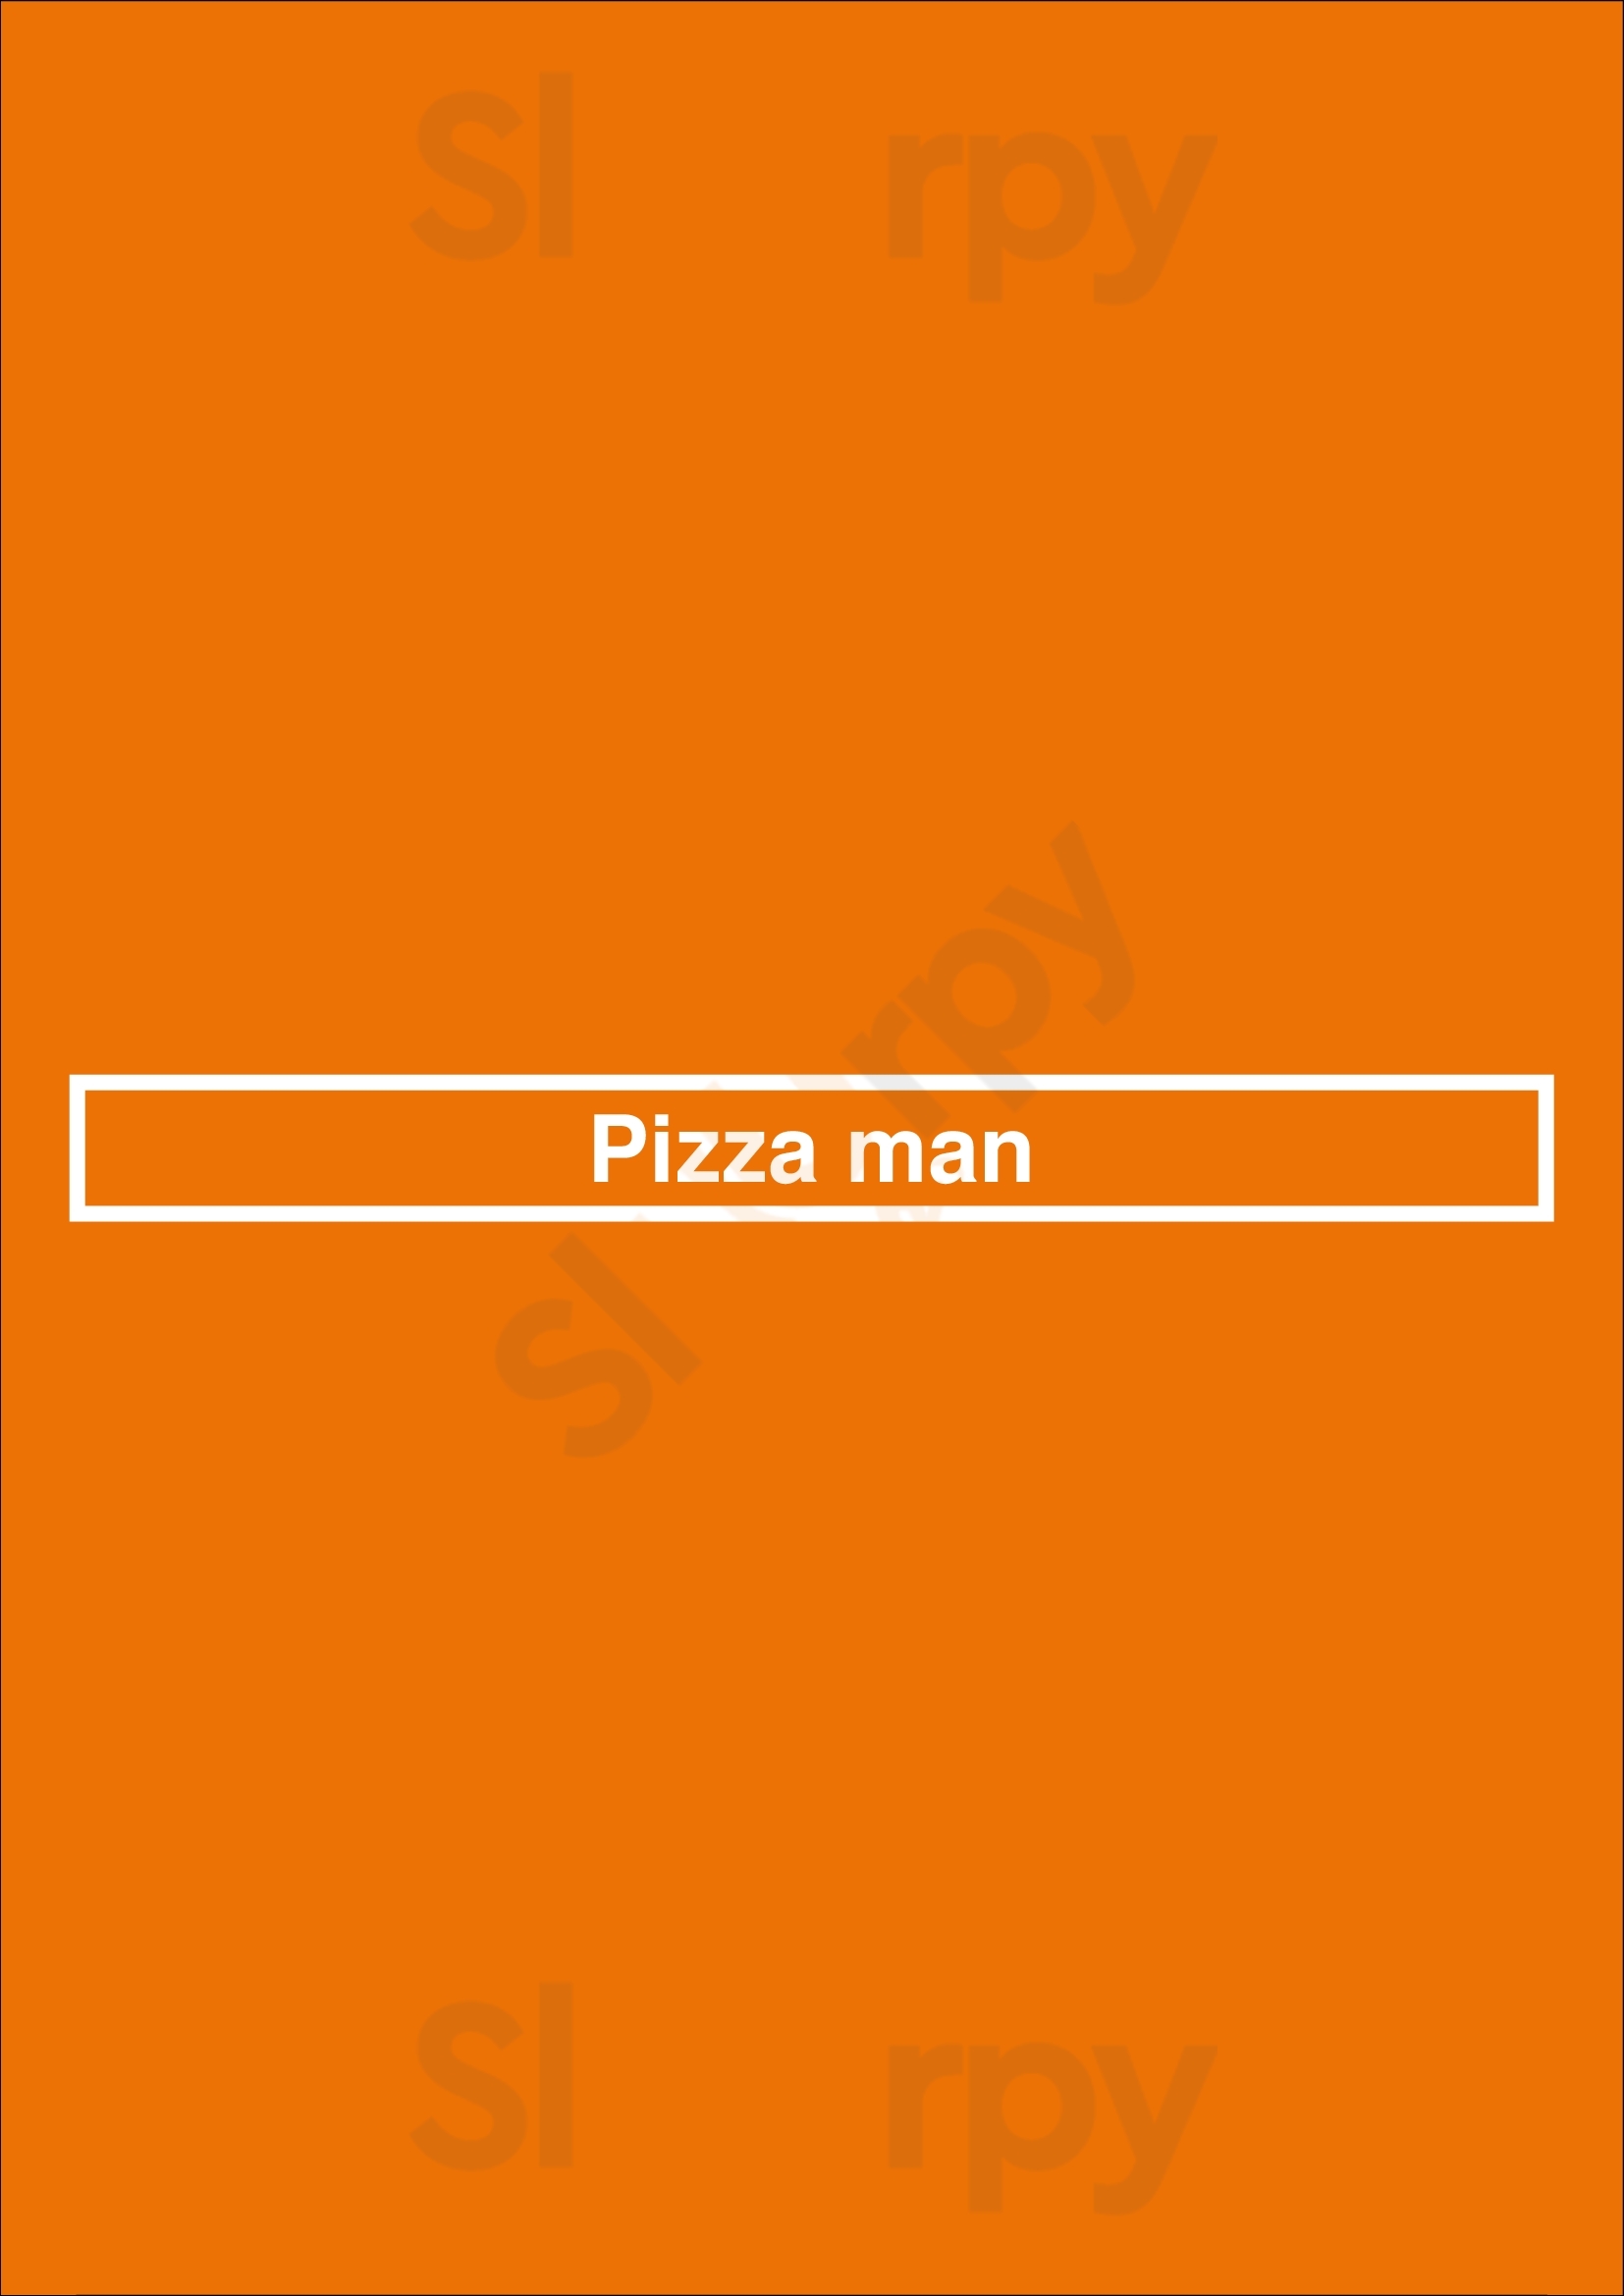 Pizza Man Milwaukee Menu - 1